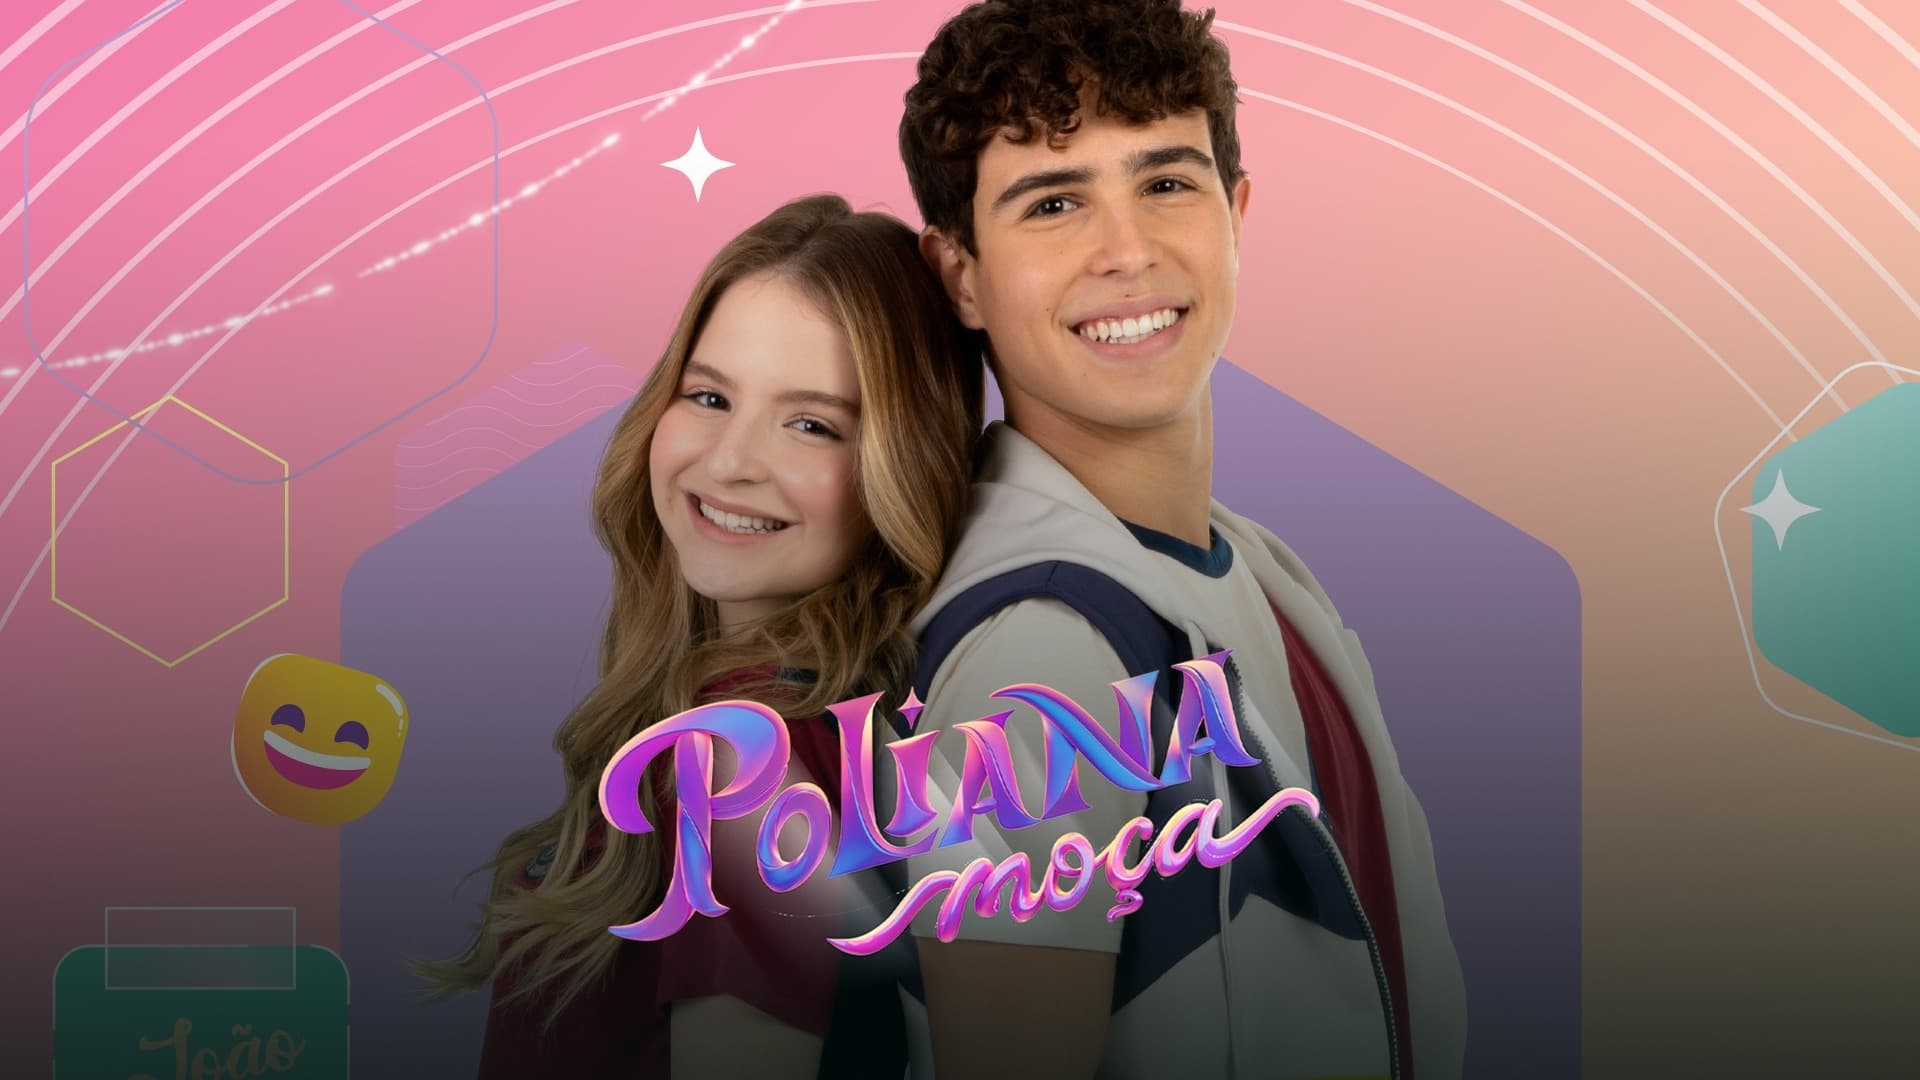 Poliana Moça - Season 1 Episode 249 : Episode 249